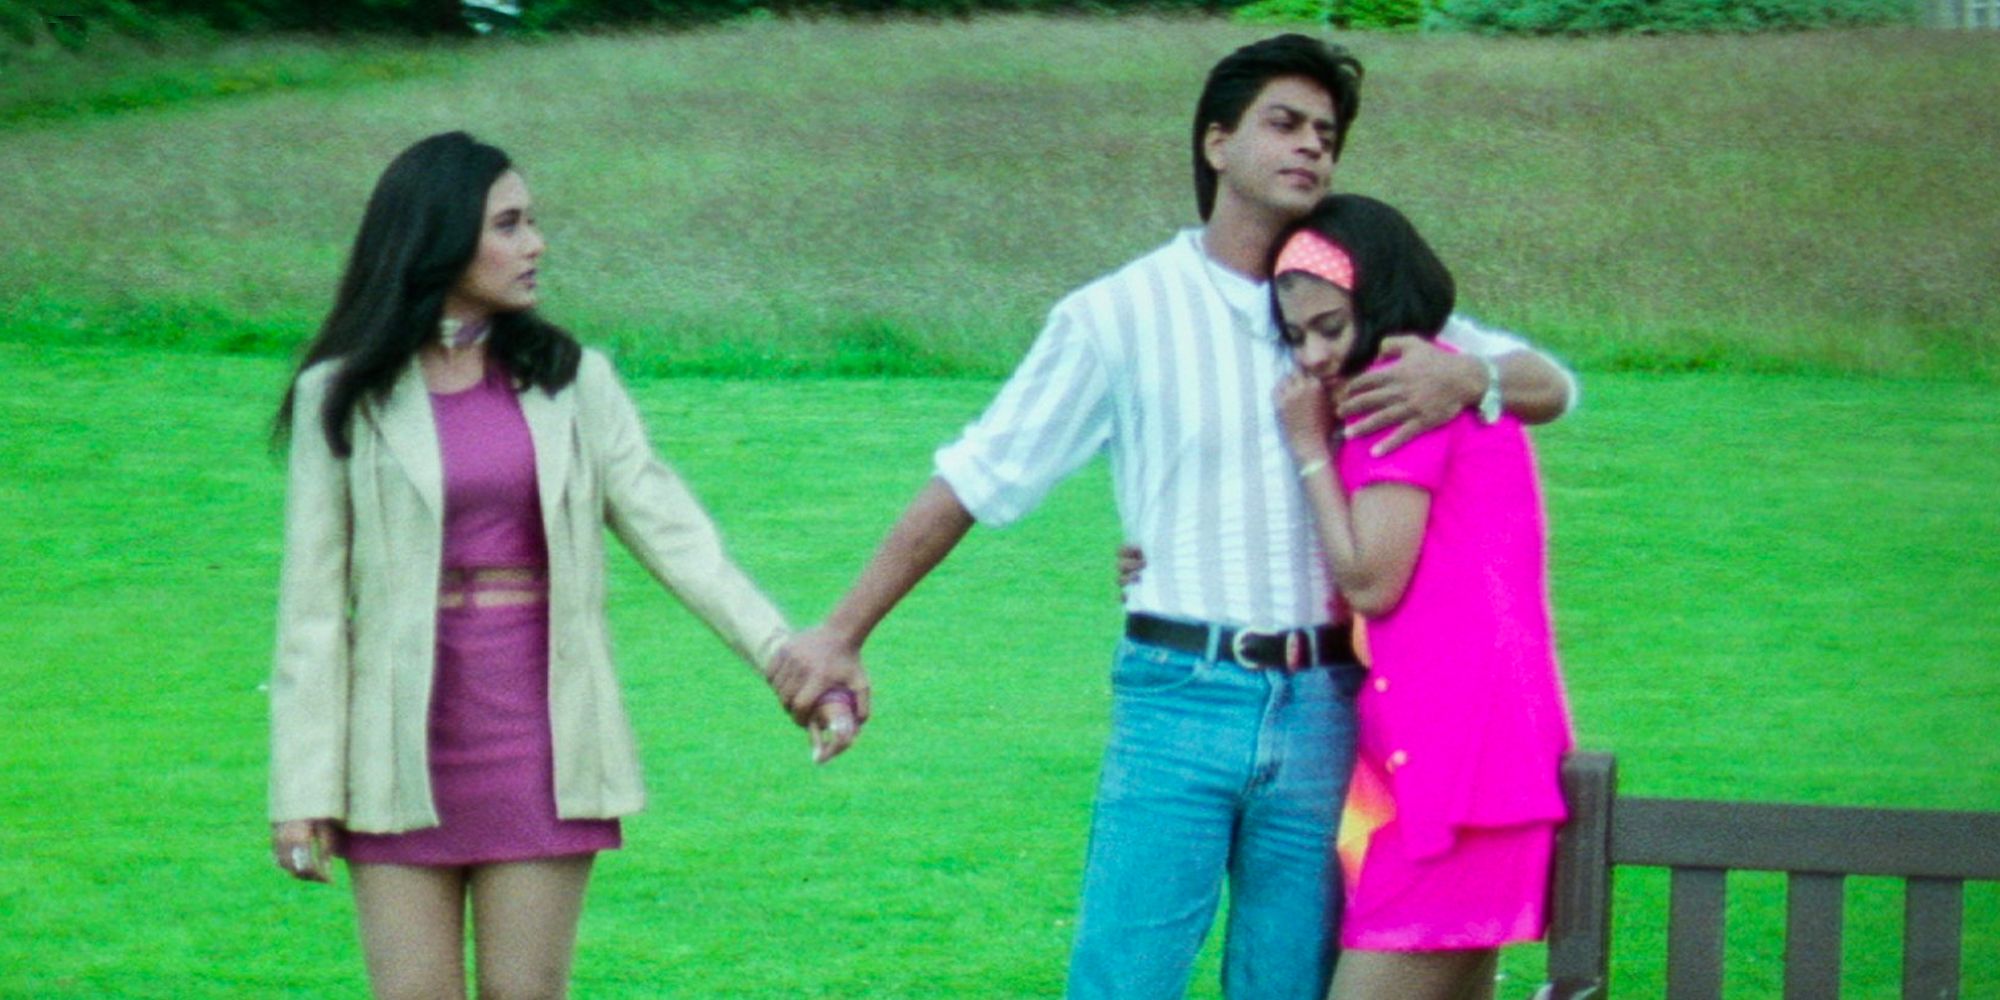 Shah Rukh Khan hugging Kajol but holding on to Rani Mukerji in a field in Kuch Kuch Hota Hai